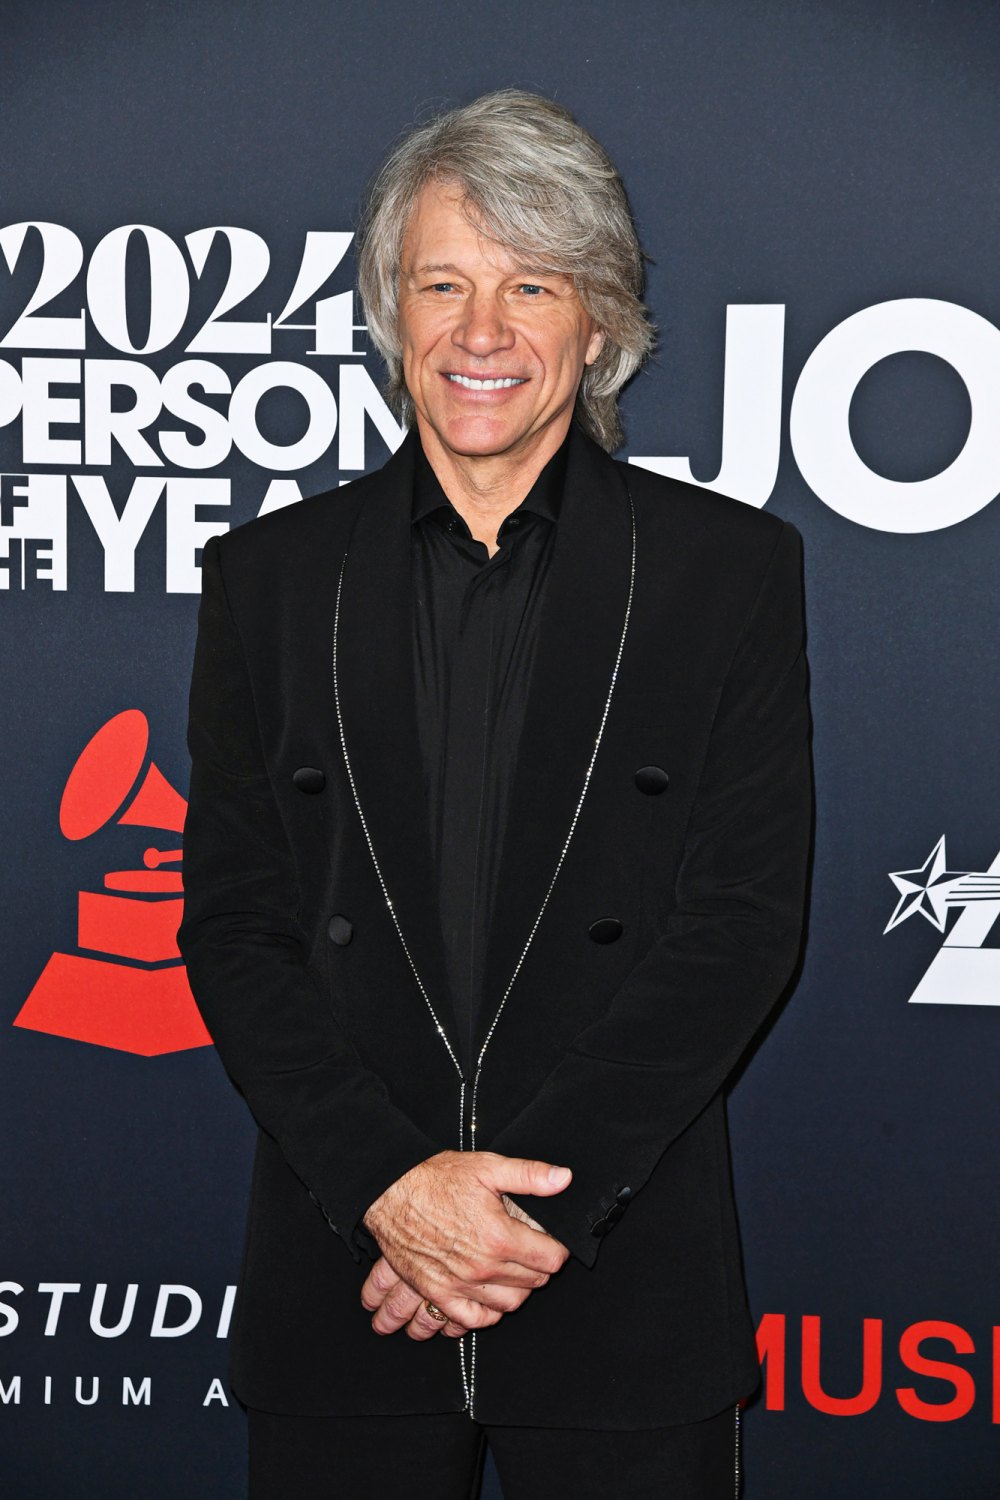 Jon Bon Jovi Unsure of When He Will Tour Again